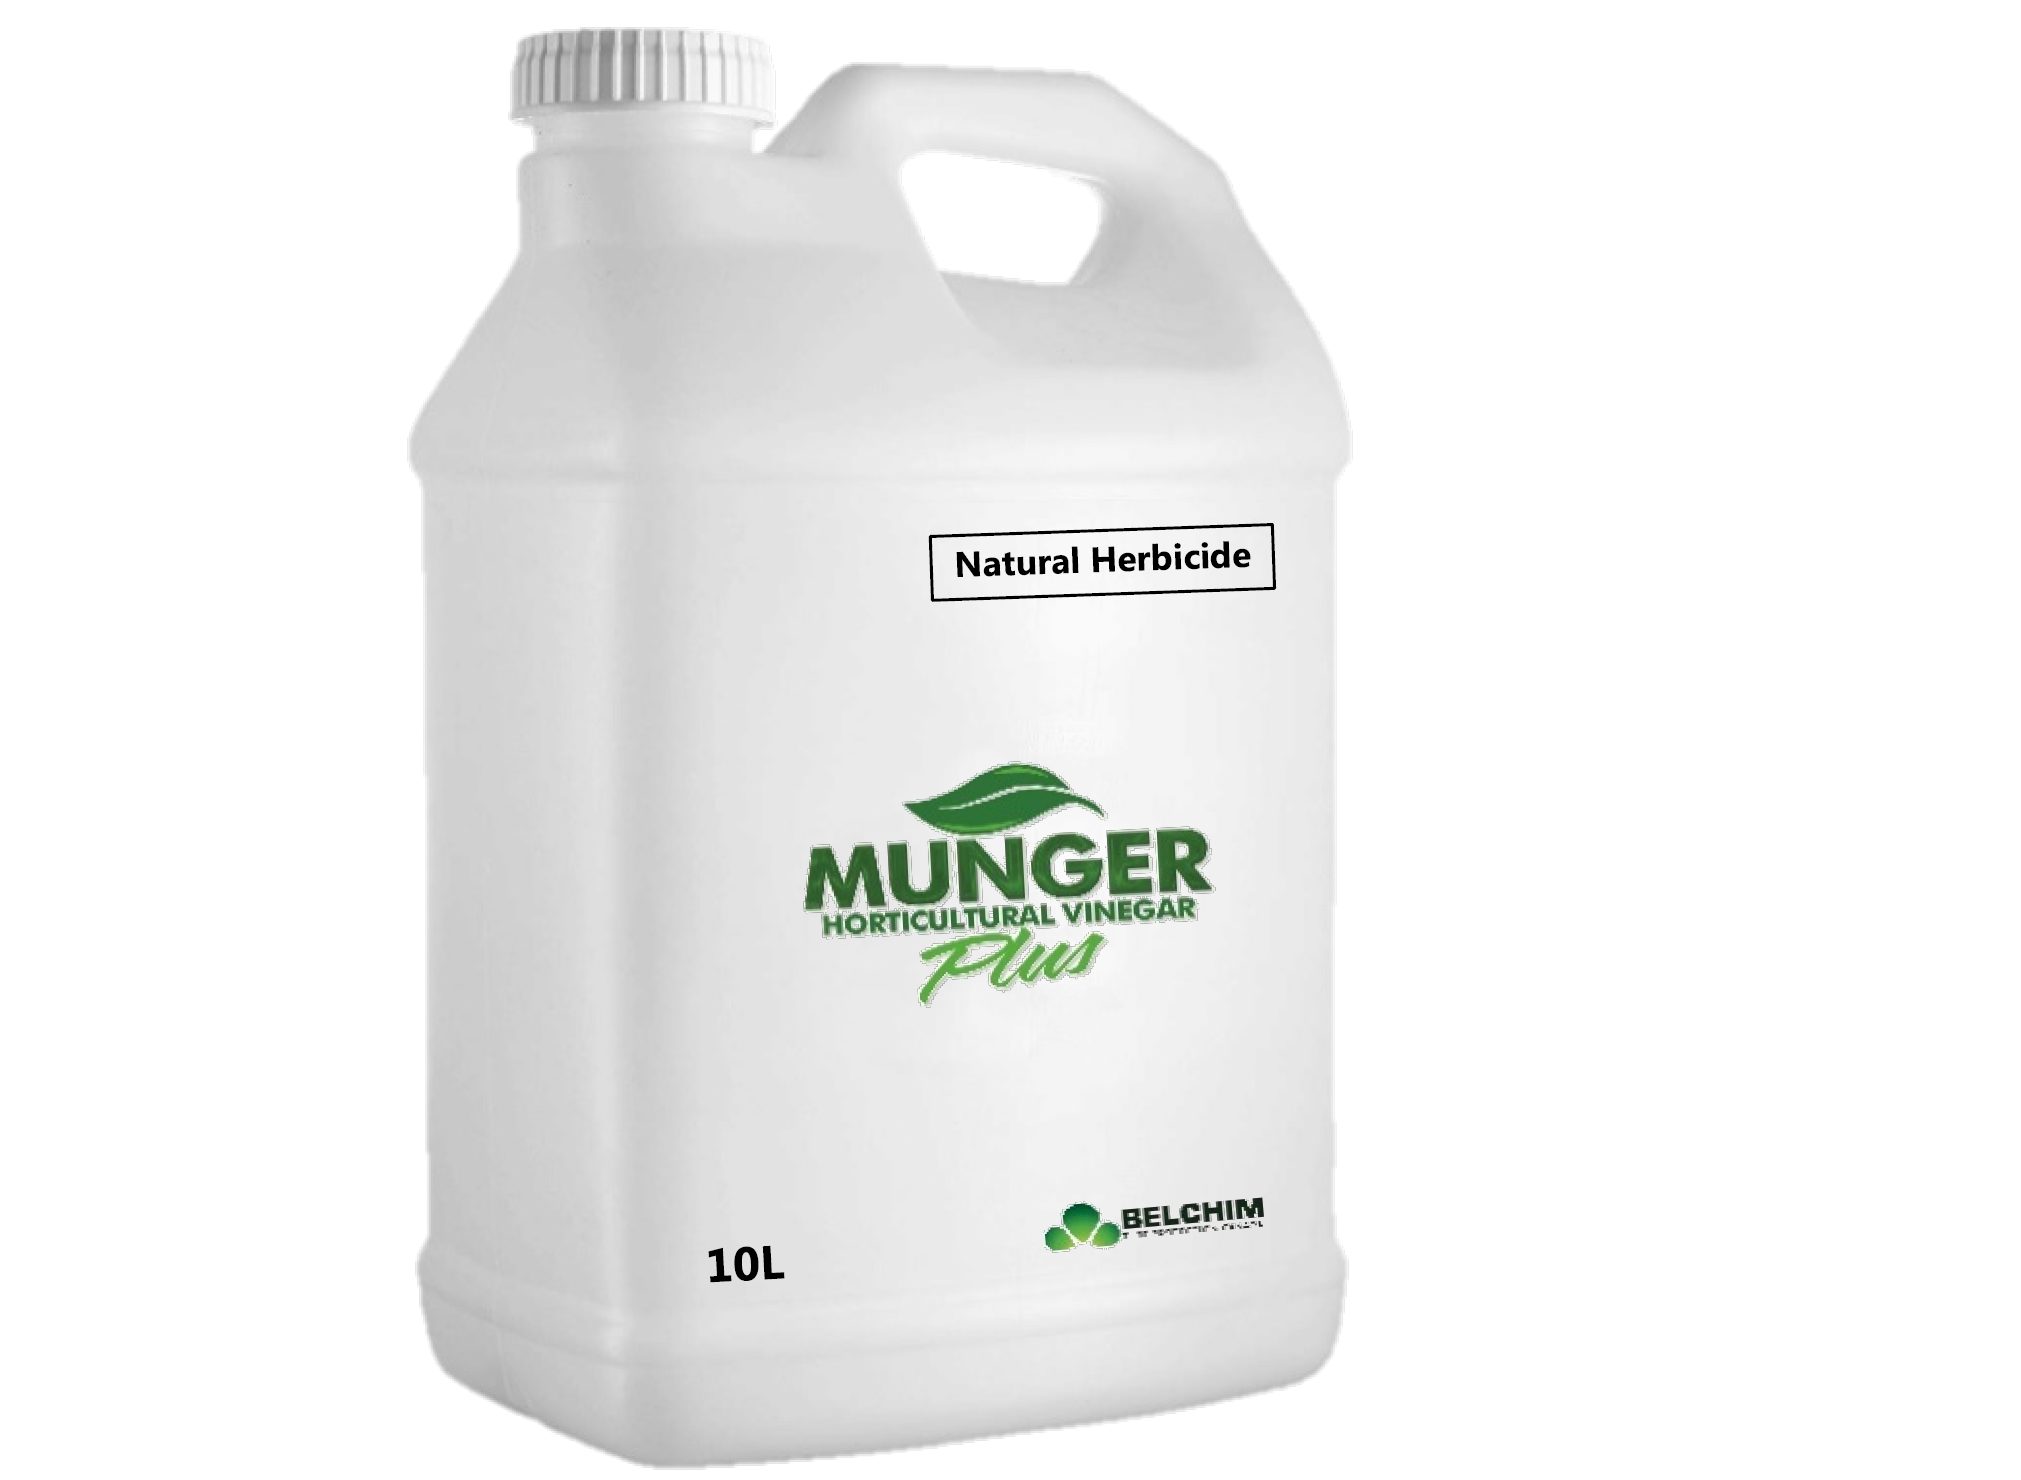 Munger Horticultural Vinegar Plus 